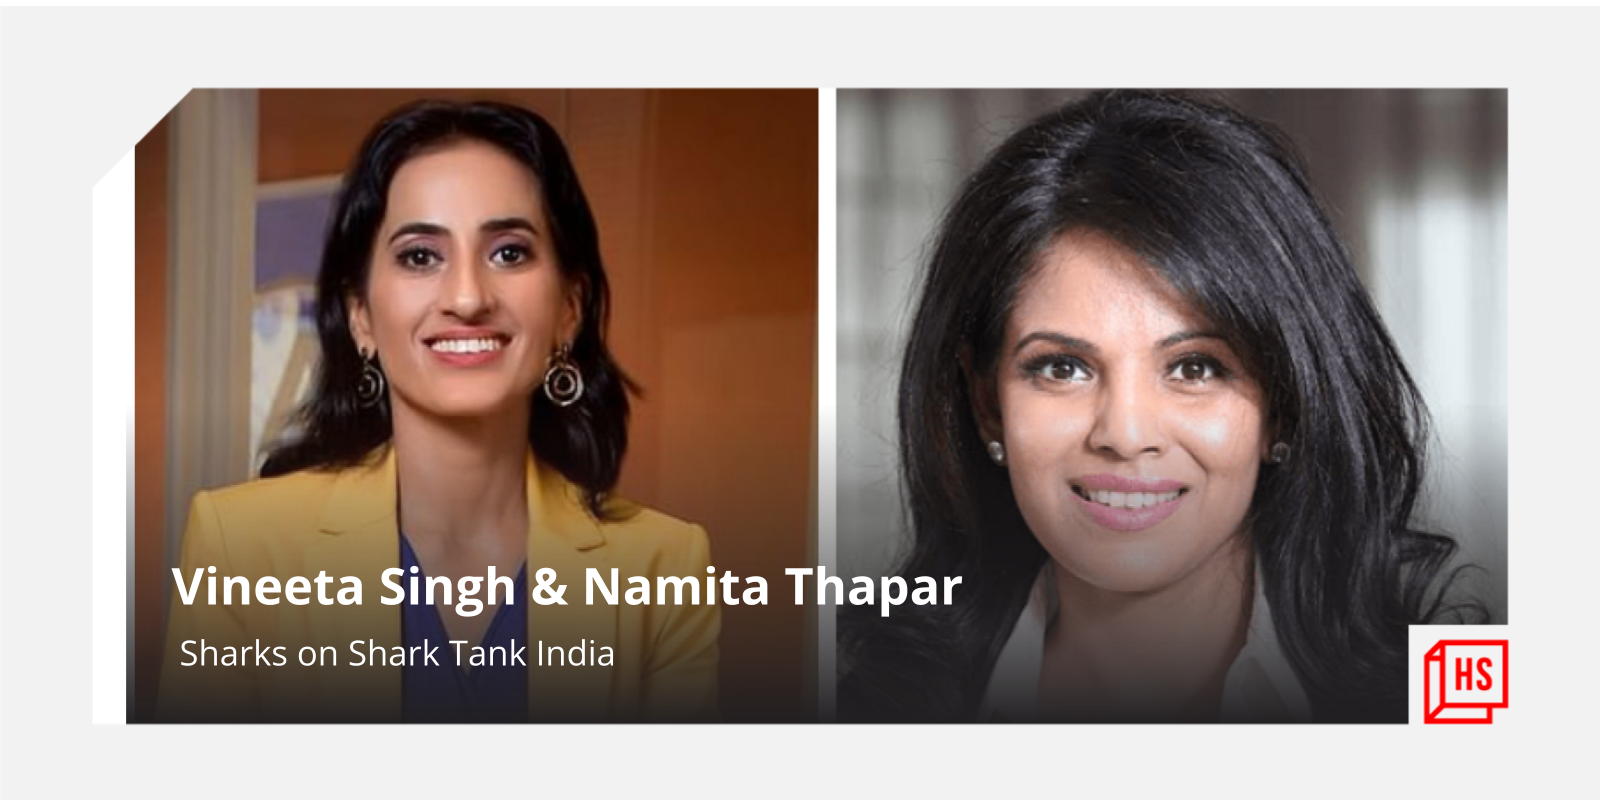 [HerStory Conversations] Meet Namita Thapar and Vineeta Singh, sharks on Shark Tank India who want a fair playing field for women entrepreneurs